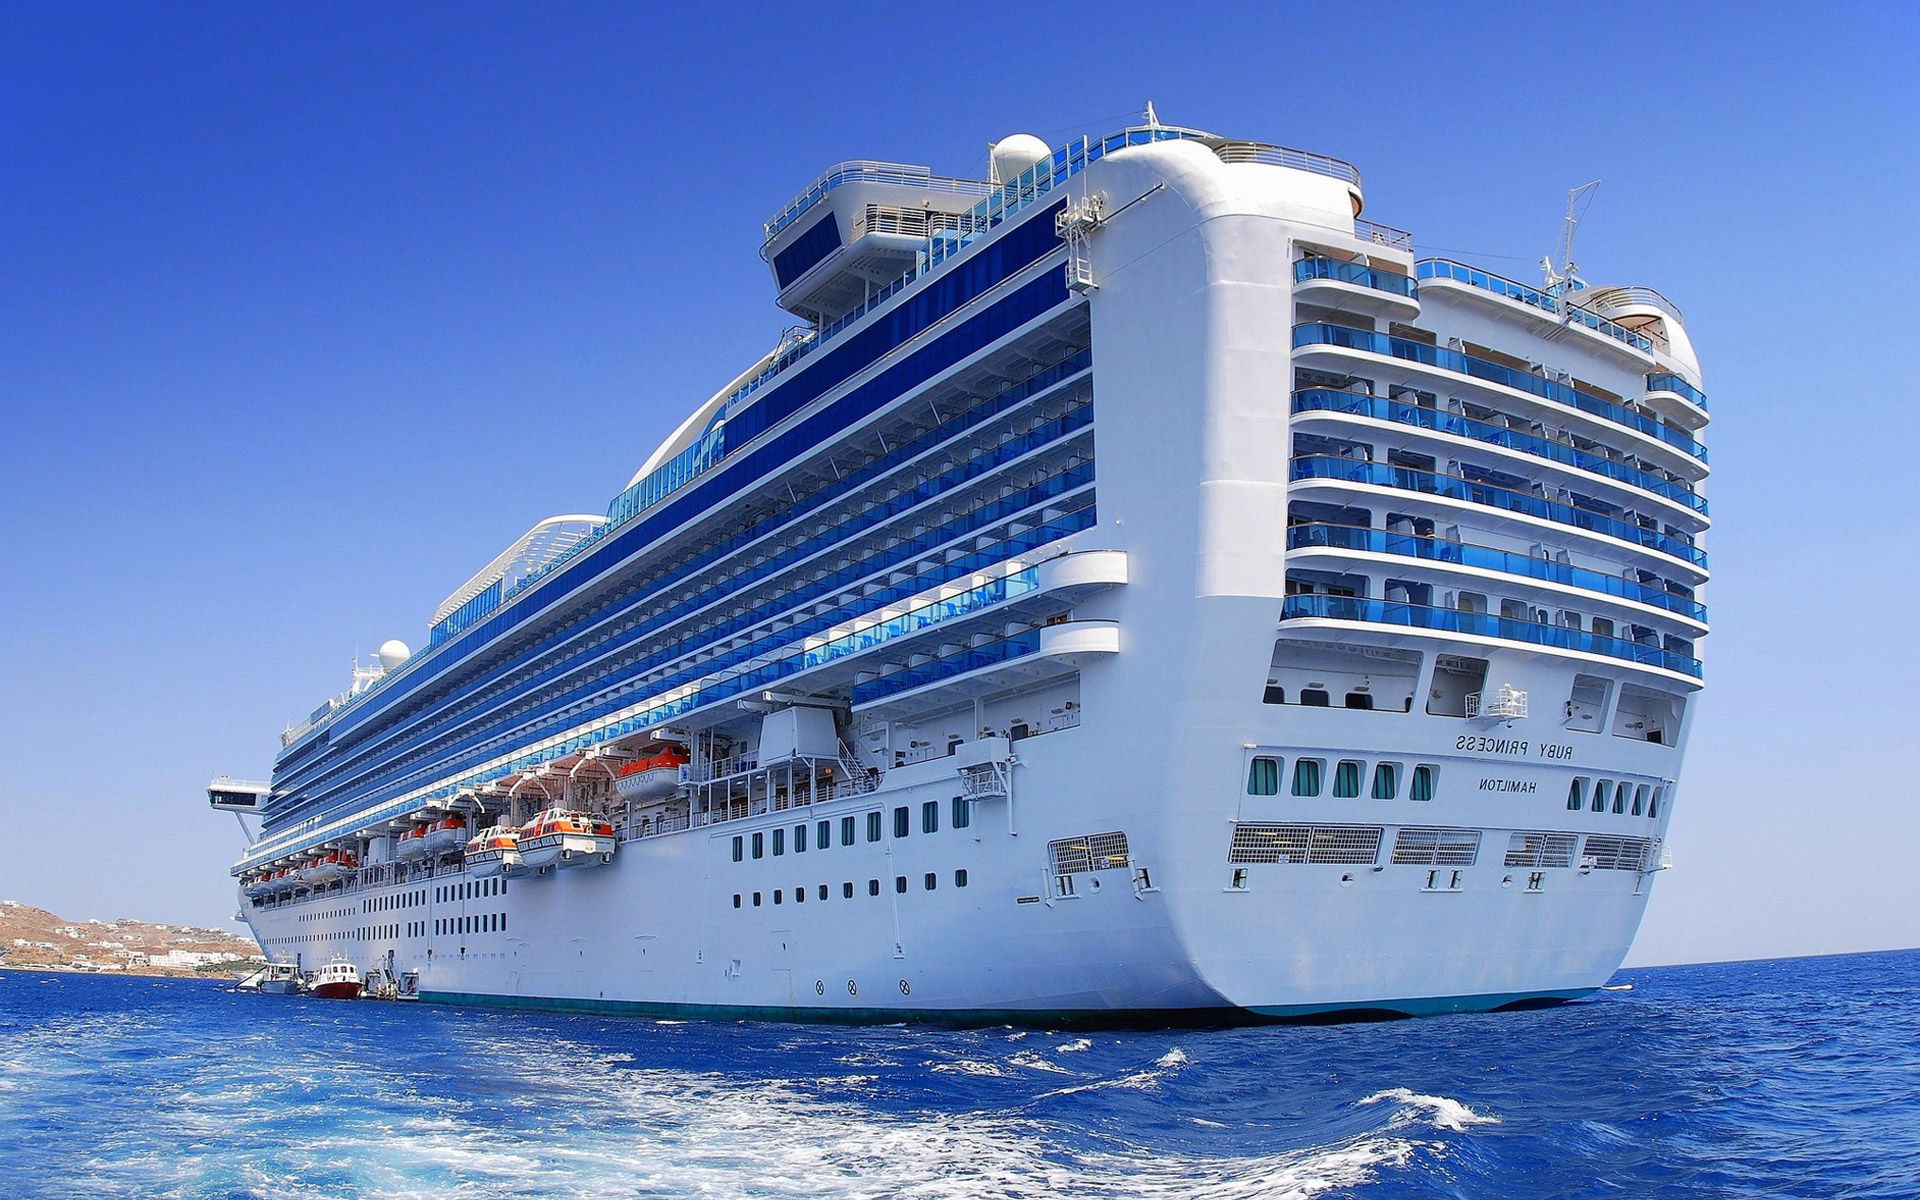 cruise ship wallpaper,cruise ship,water transportation,ship,cruiseferry,naval architecture